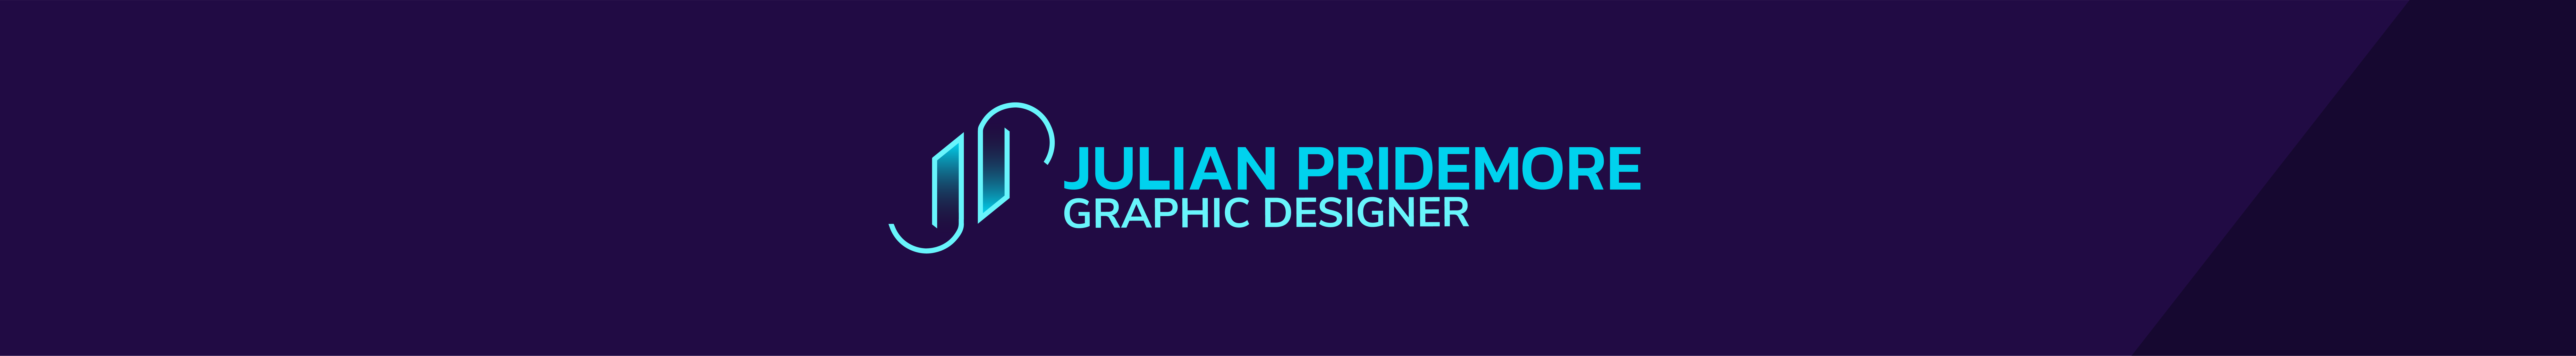 Julian Pridemores profilbanner